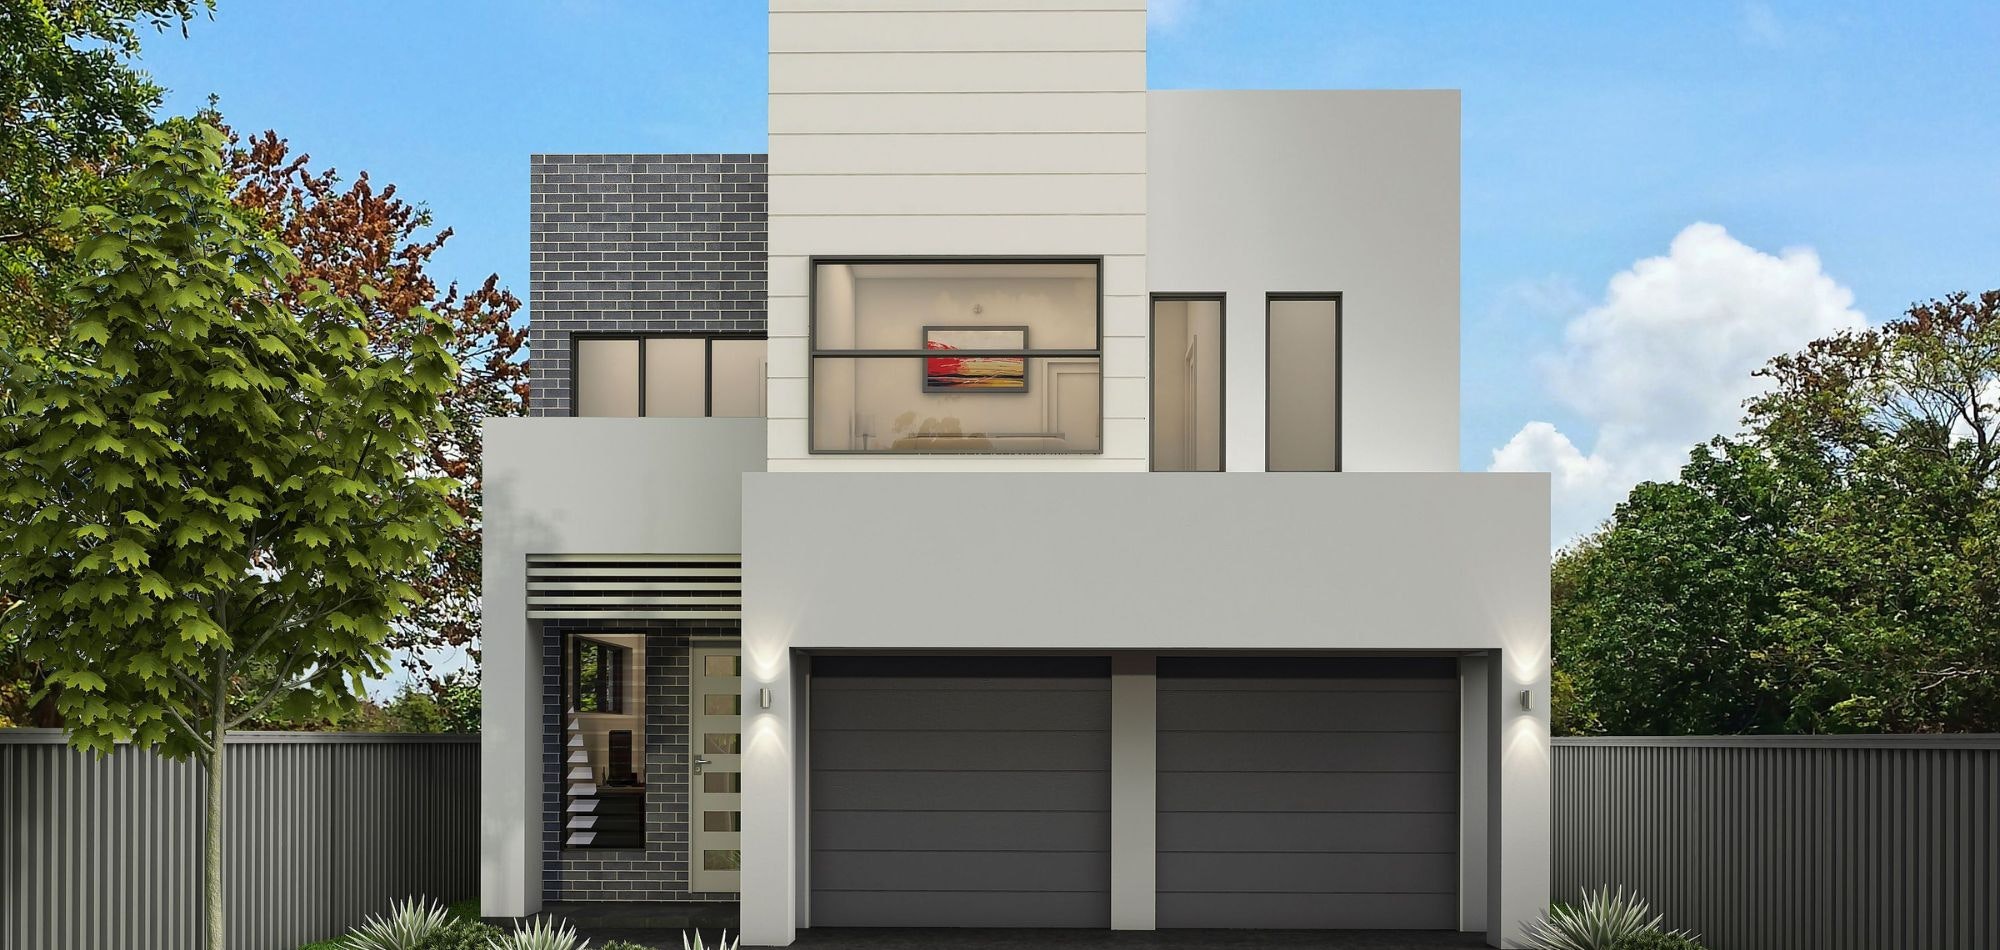 Home-Designs Dual-Living 10m-2-car-garage dualbanner